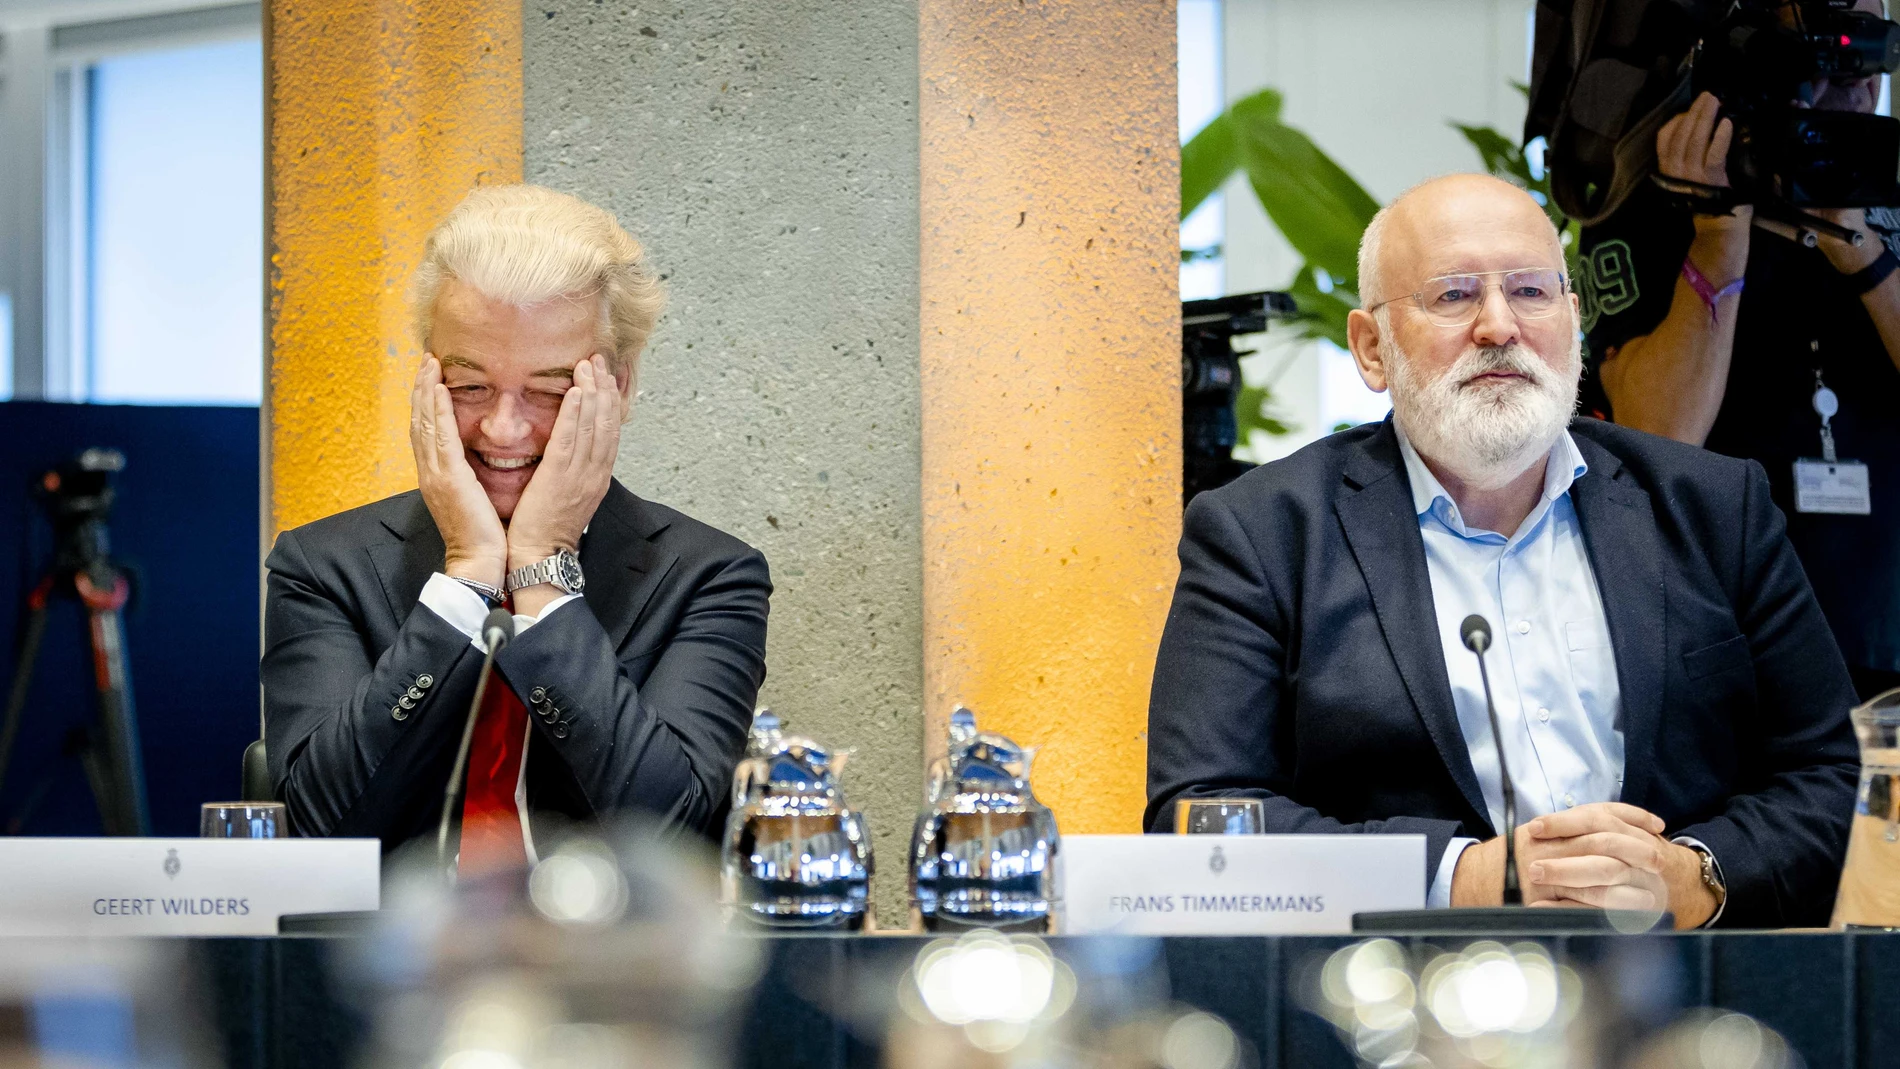 El líder de la extrema derecha neerlandesa, Geert Wilders, junto al socialdemócrata Frans Timmermans